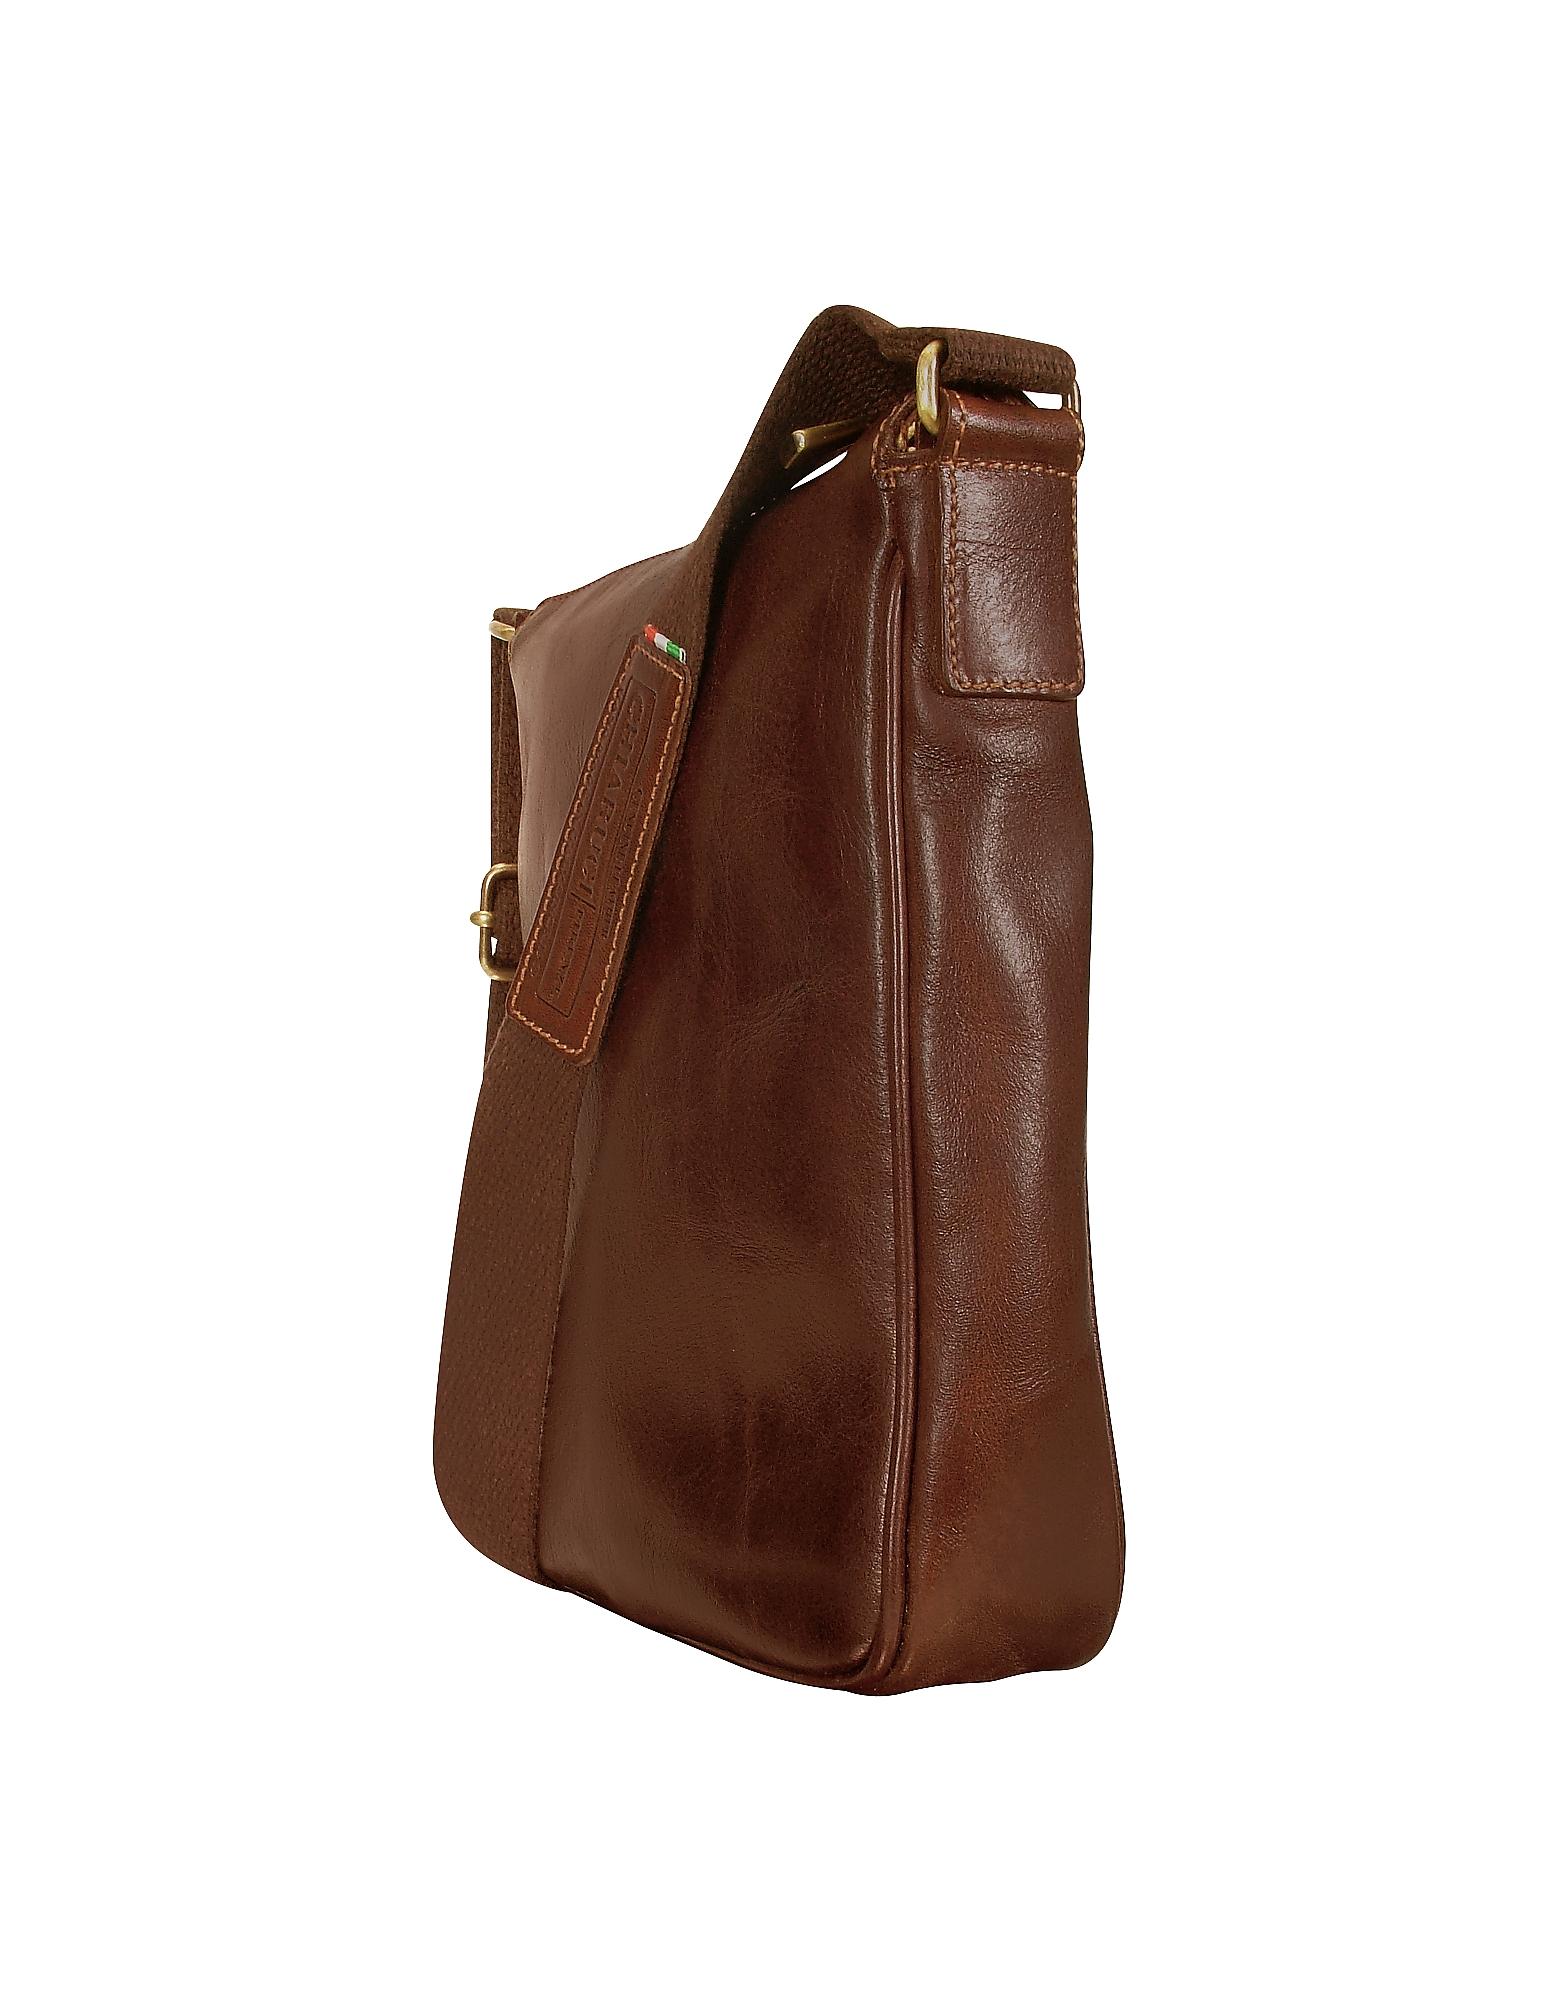 Chiarugi Zip-Up Leather Cross-Body Bag in Brown for Men - Lyst